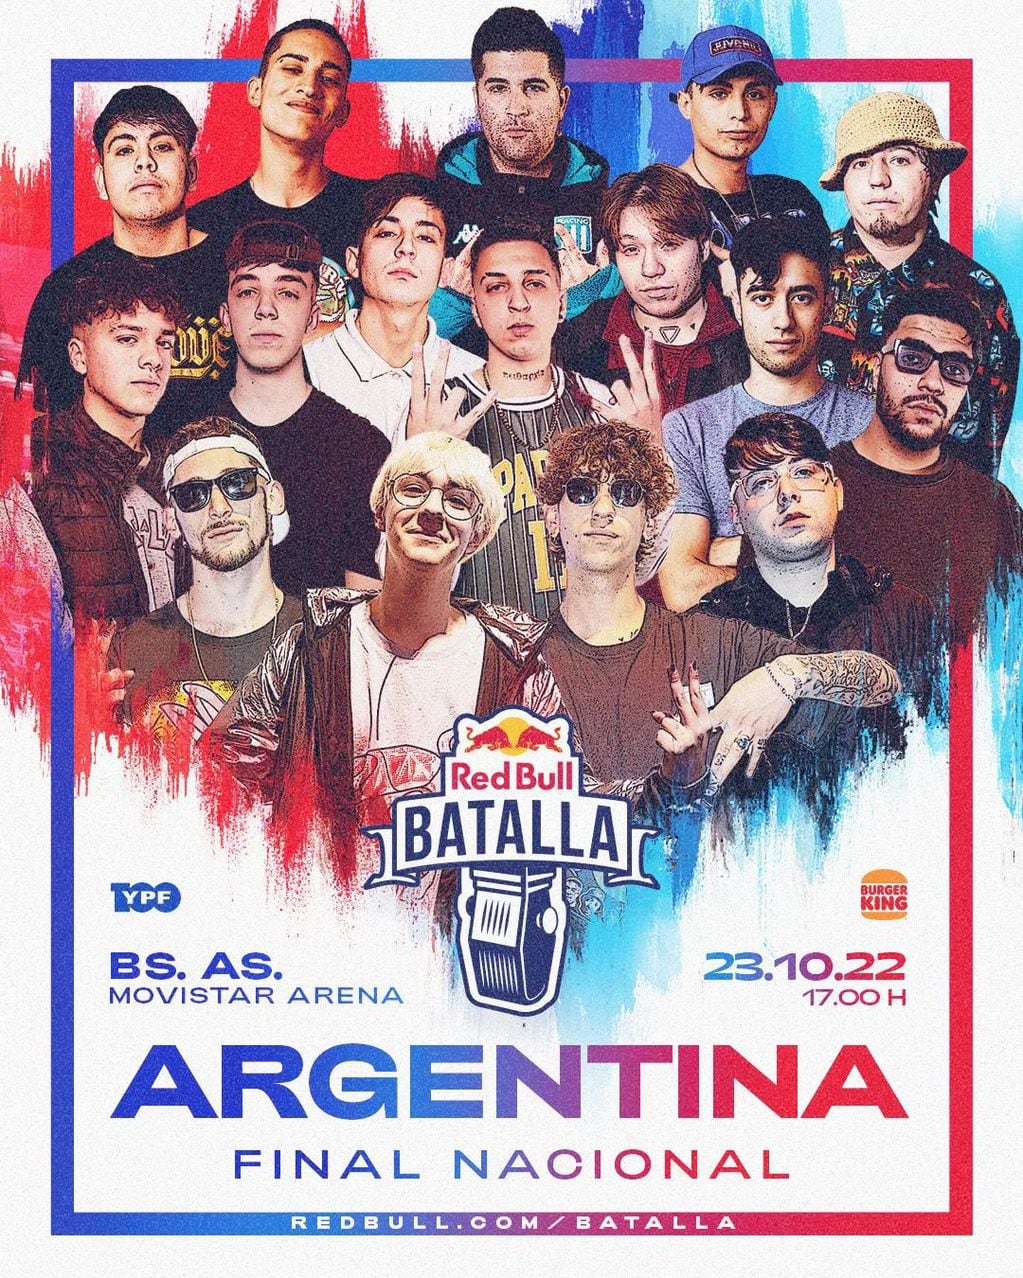 Final Nacional de Red Bull Argentina 2022 competidores, host, DJ y